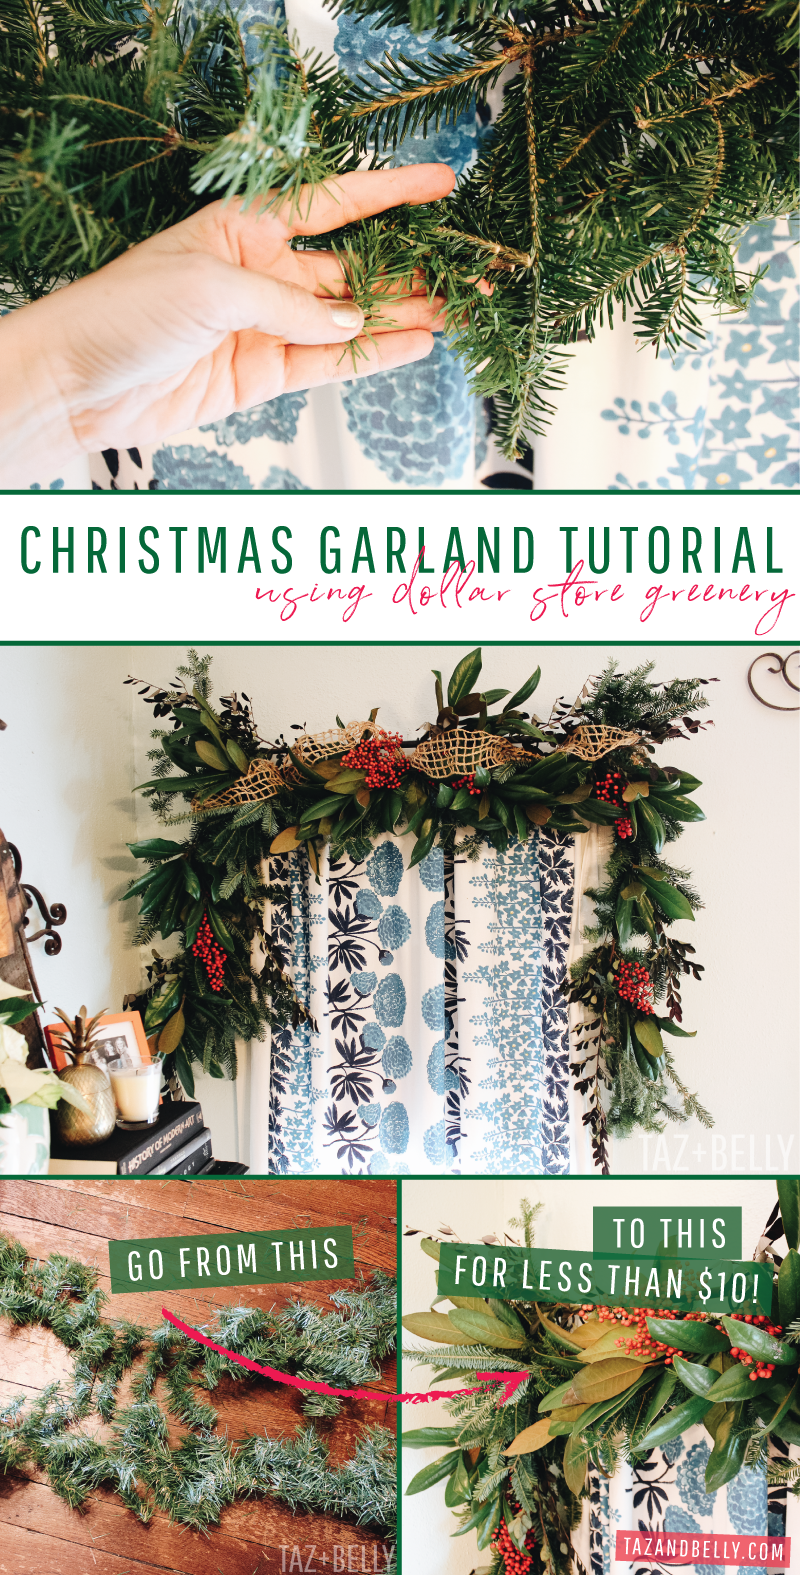 Christmas Garland Tutorial | tazandbelly.com